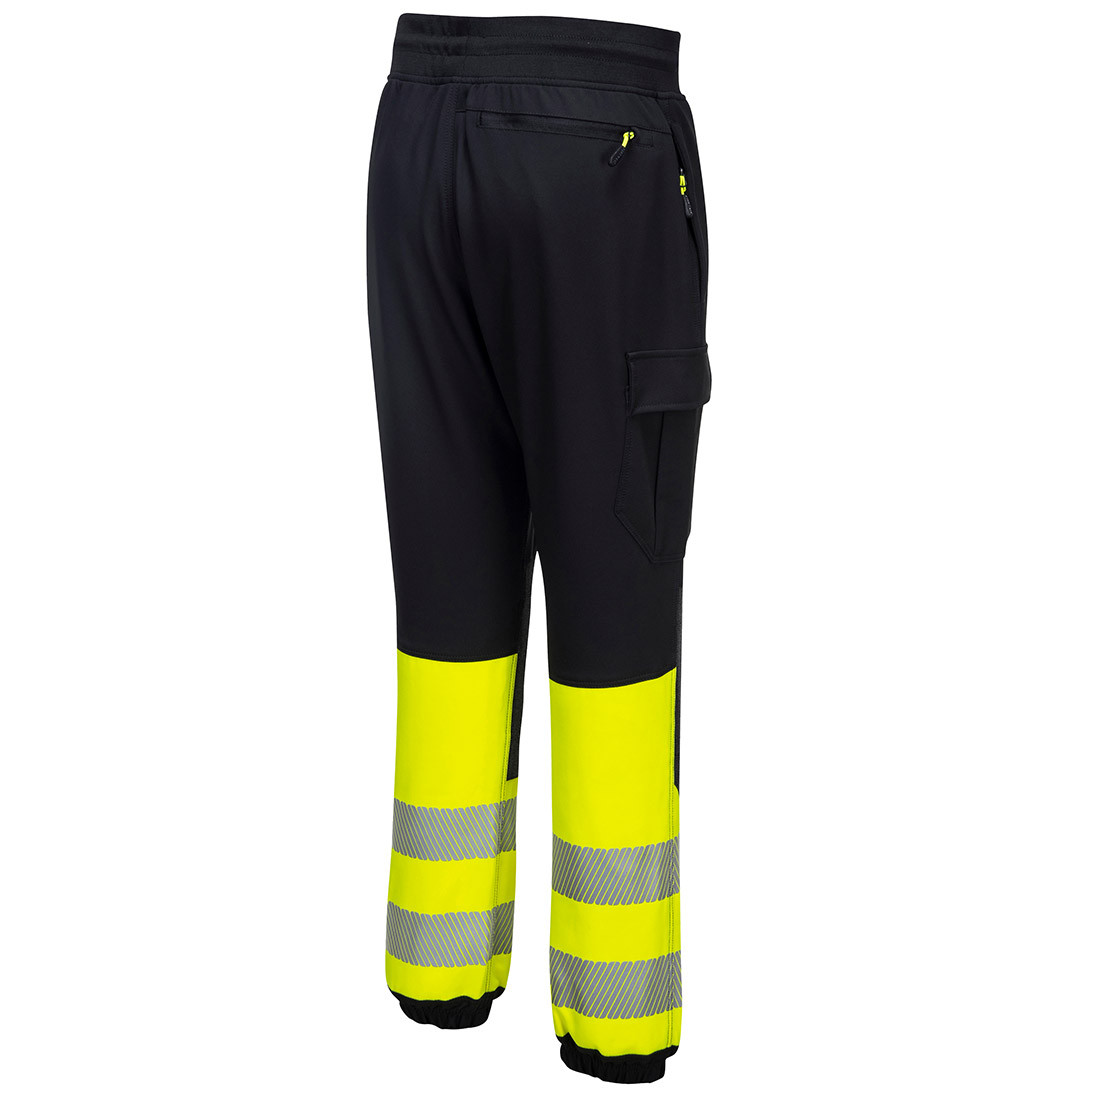 Pantaloni HI VIS Flexi gama KX3 - Imbracaminte de protectie